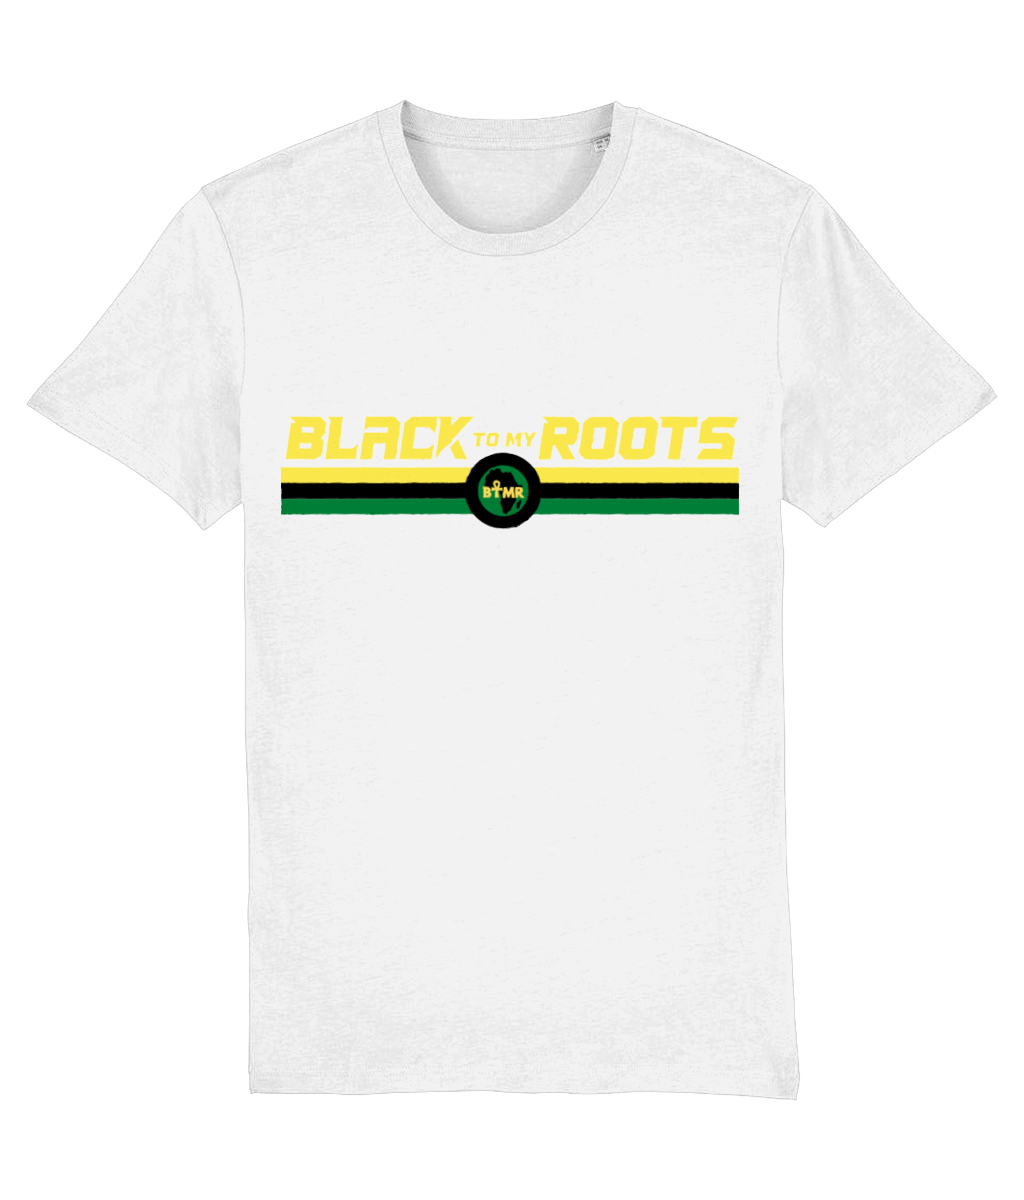 Limited Edition BlackToMyRoots Organic Cotton T Shirt